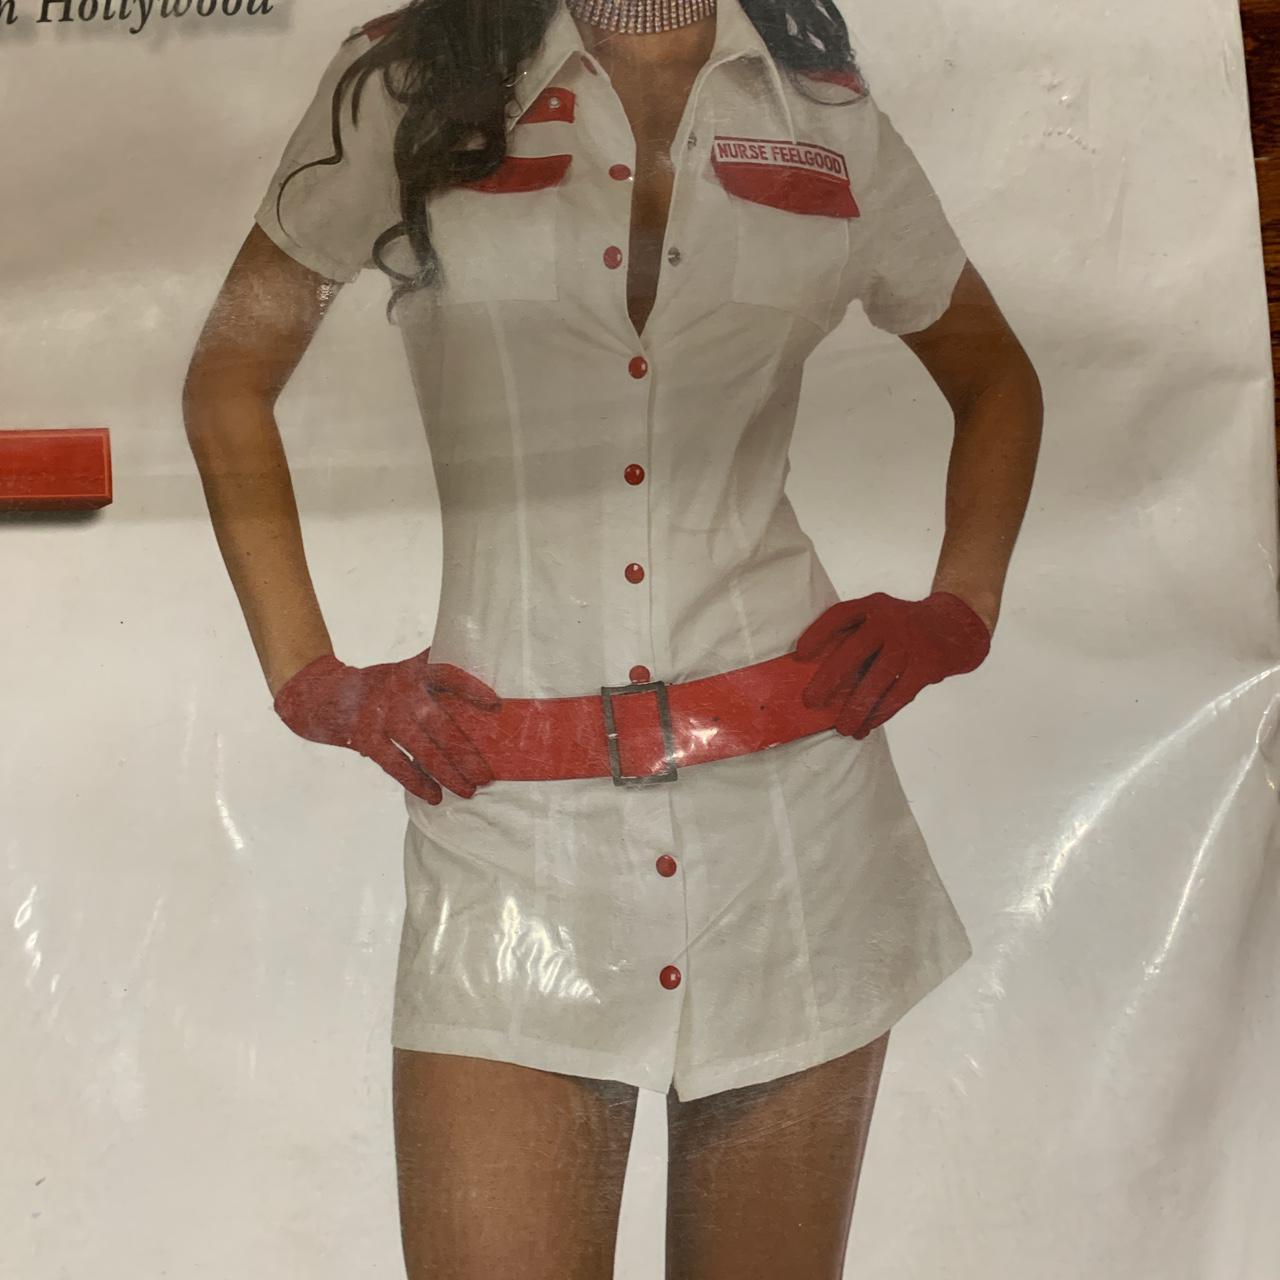 Sexy Nurse Feelgood, Women's Costume Bodysuit